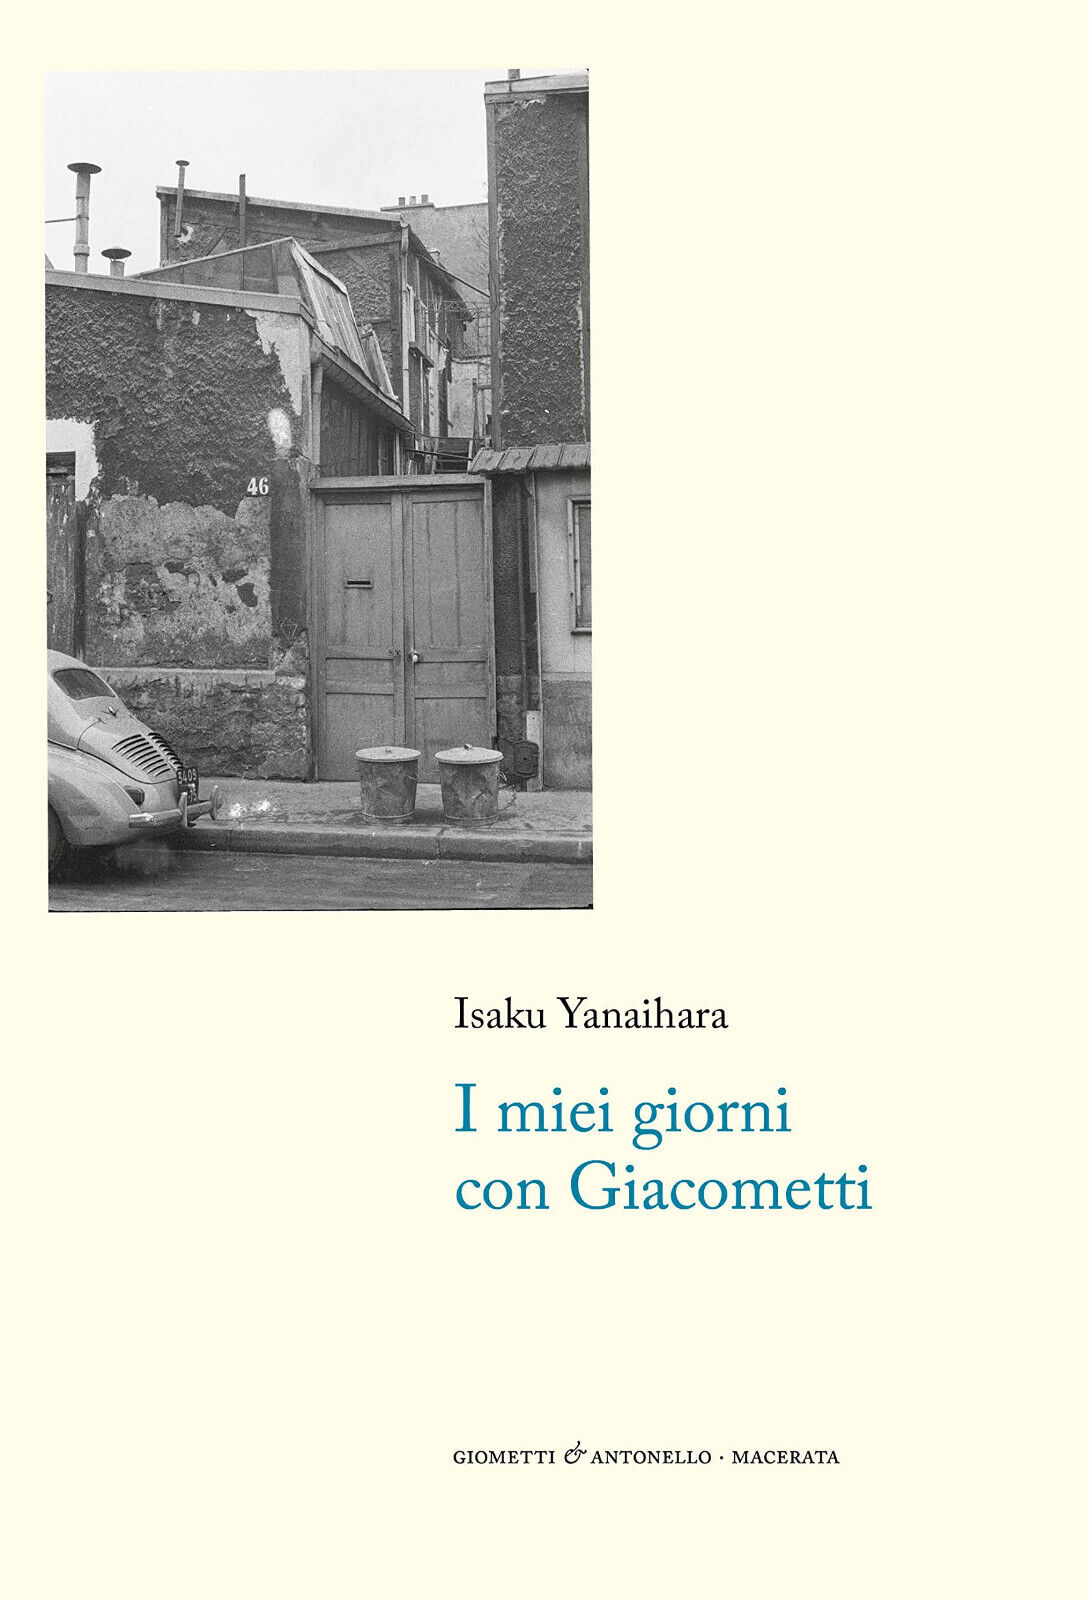 I miei giorni con Giacometti - Isaku Yanaihara - 2021